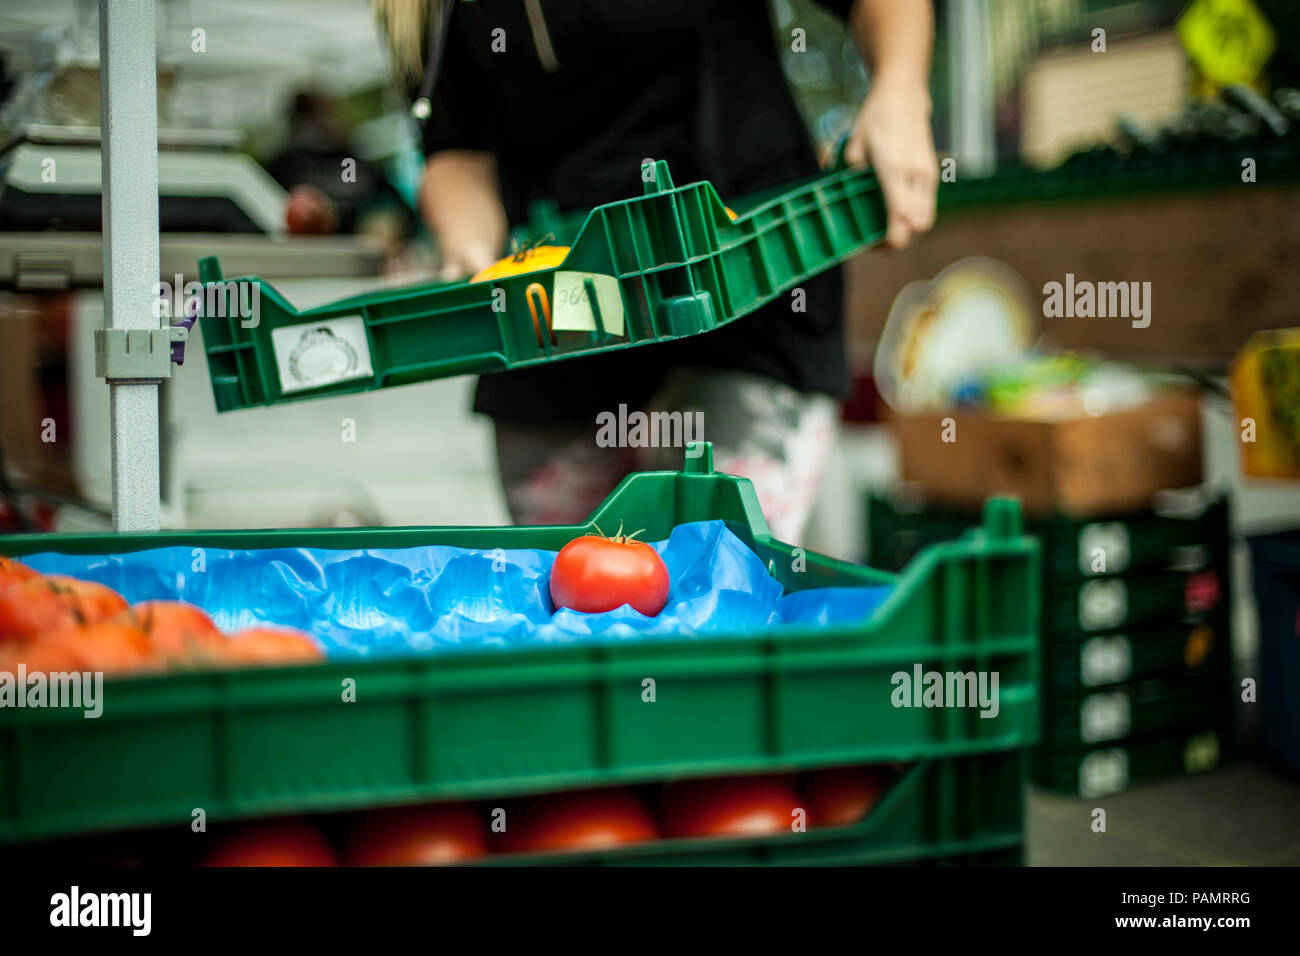 Woman pilling up tomato baskets at farmer's market Stock Photo